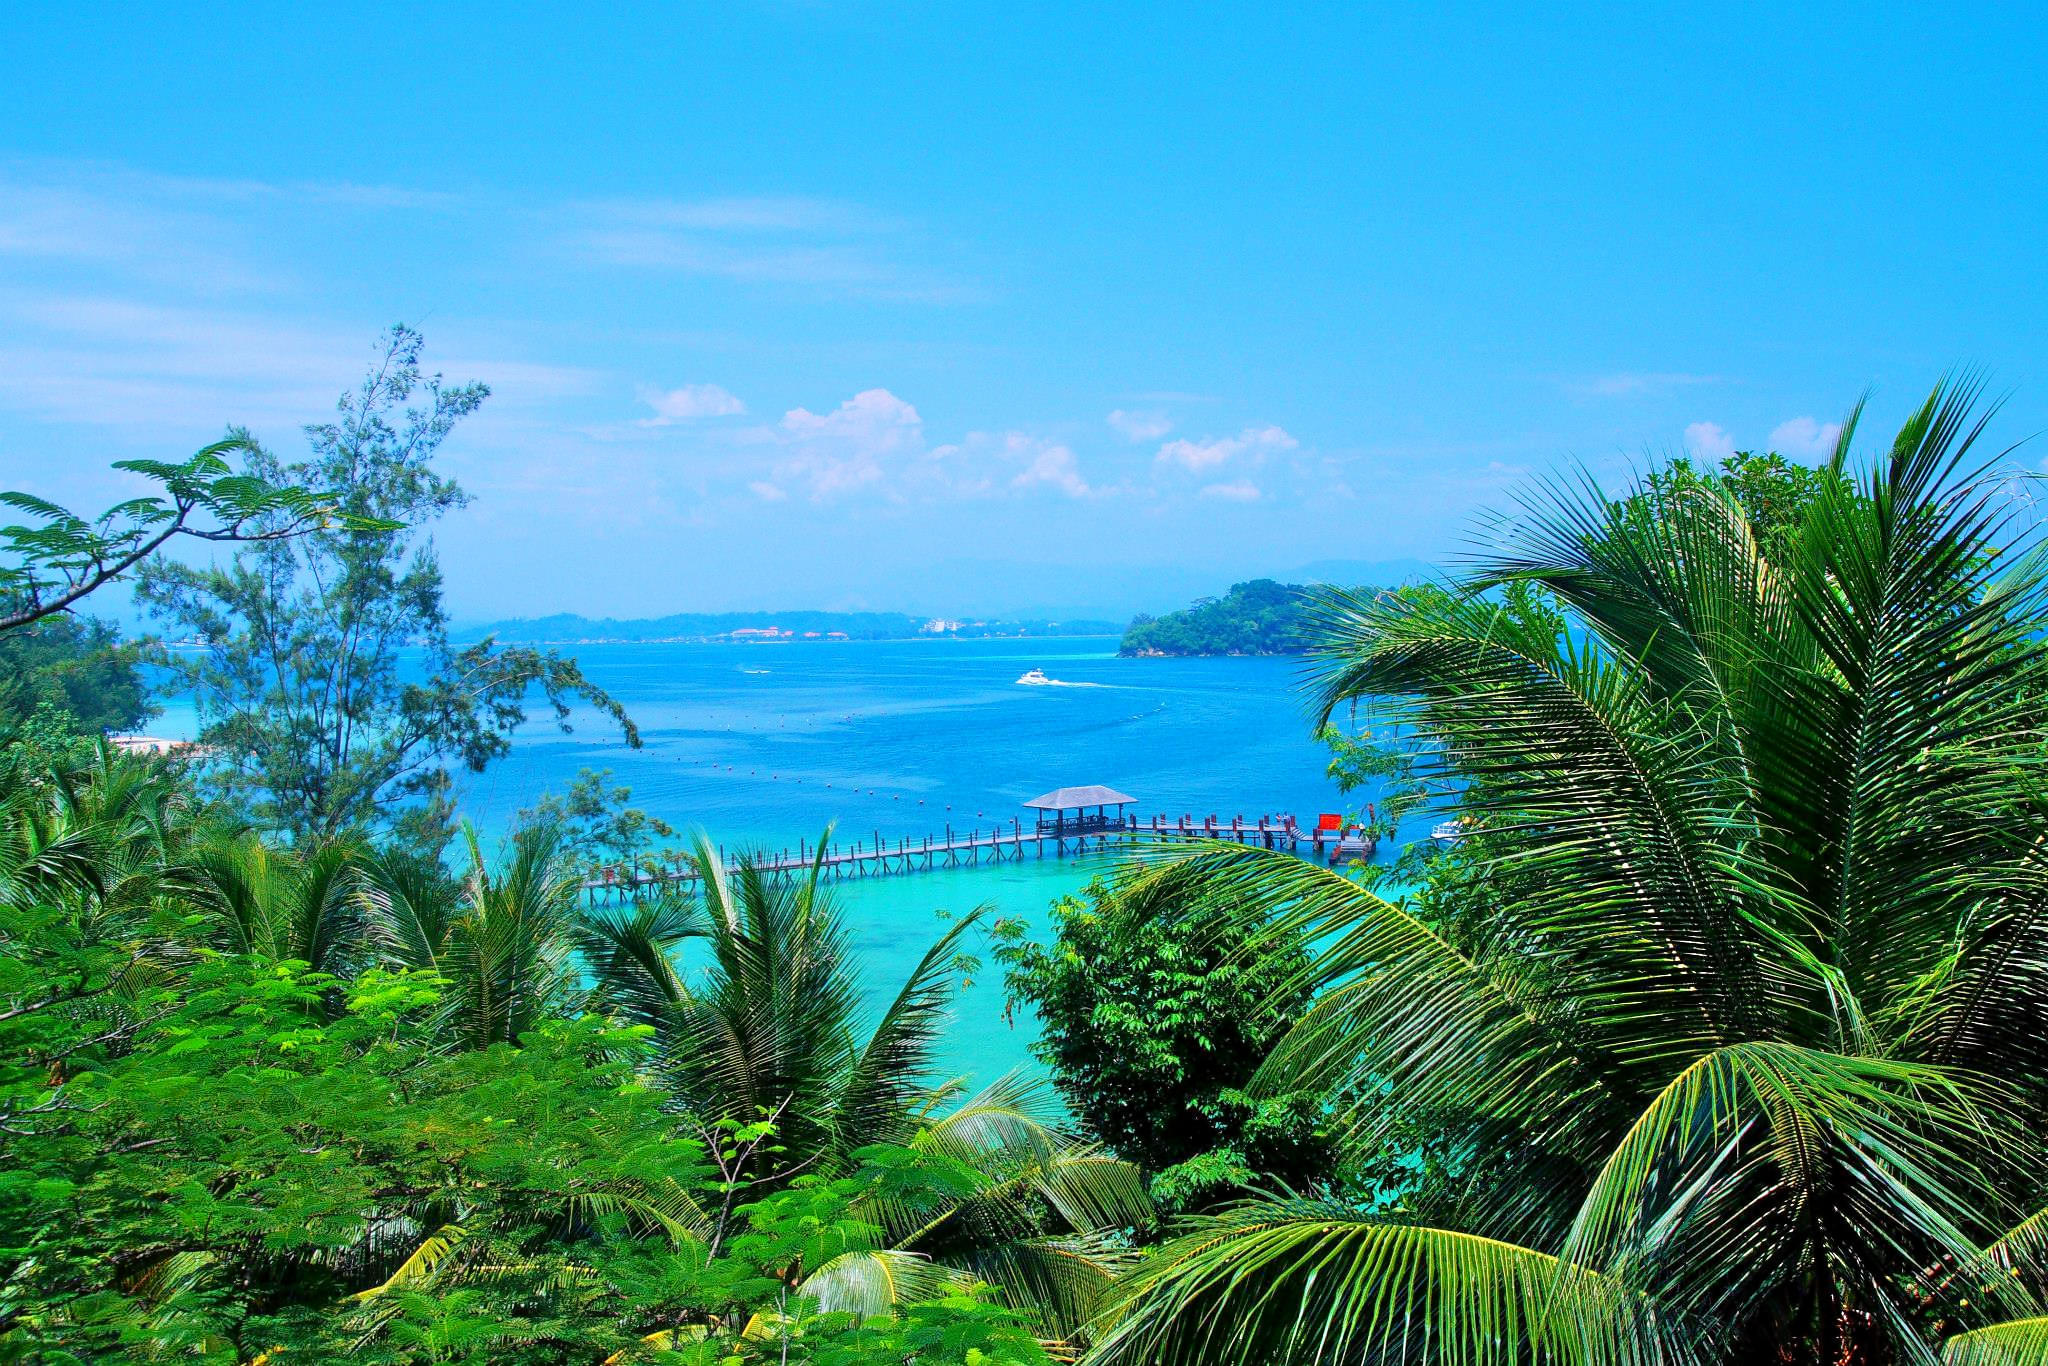 Manukan Island Resort Overview